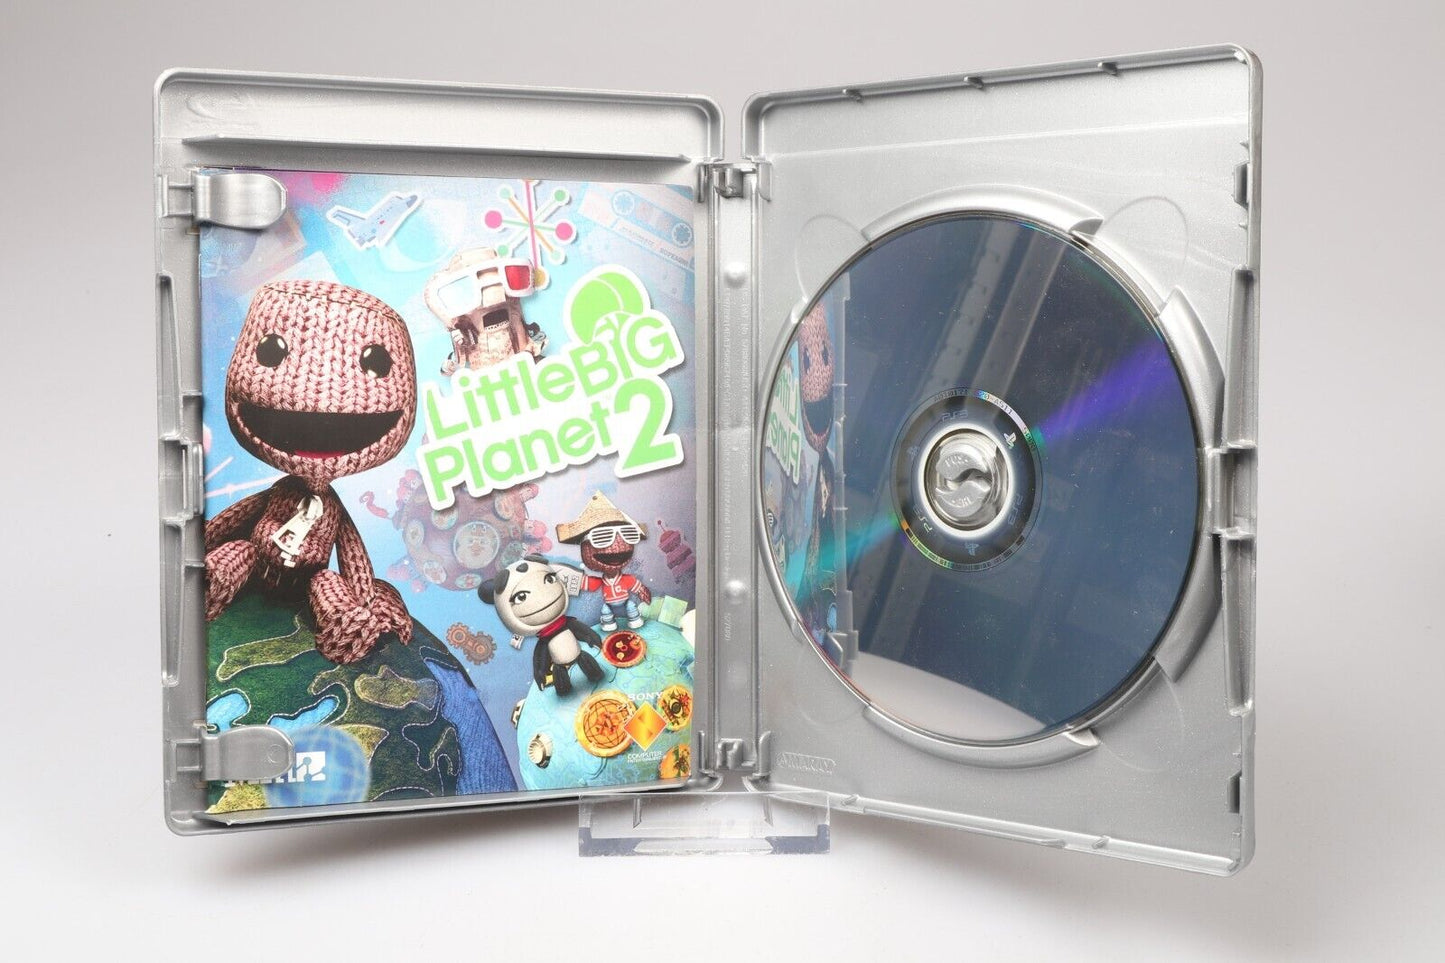 PS3 | LittleBigPlanet 2PL (PAL) 